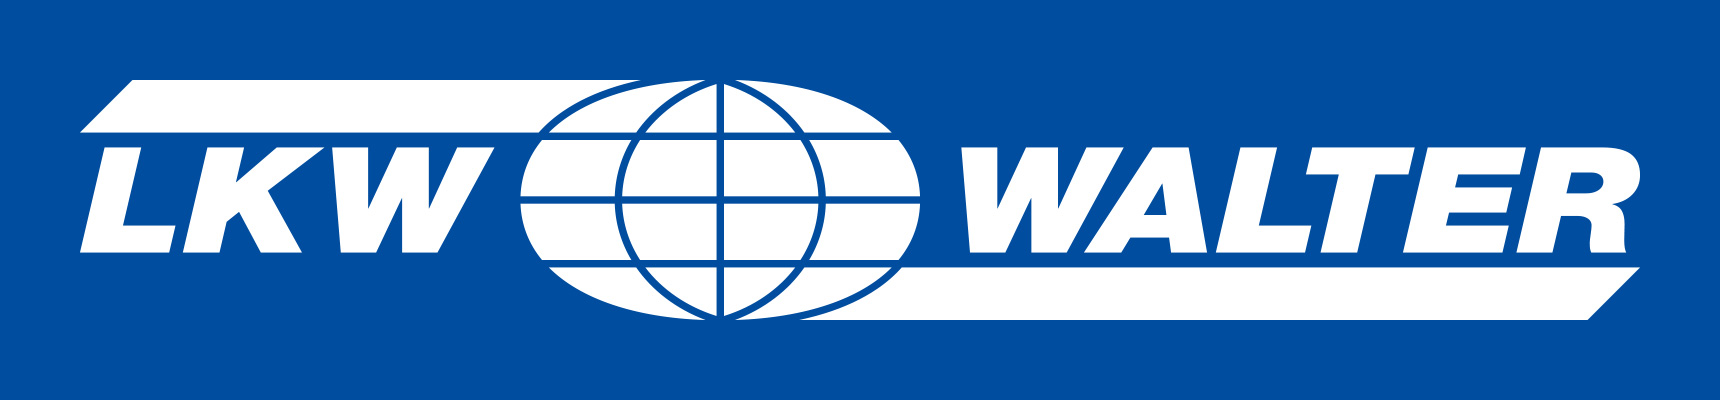 LKW WALTER Internationale Transportorganisation AG